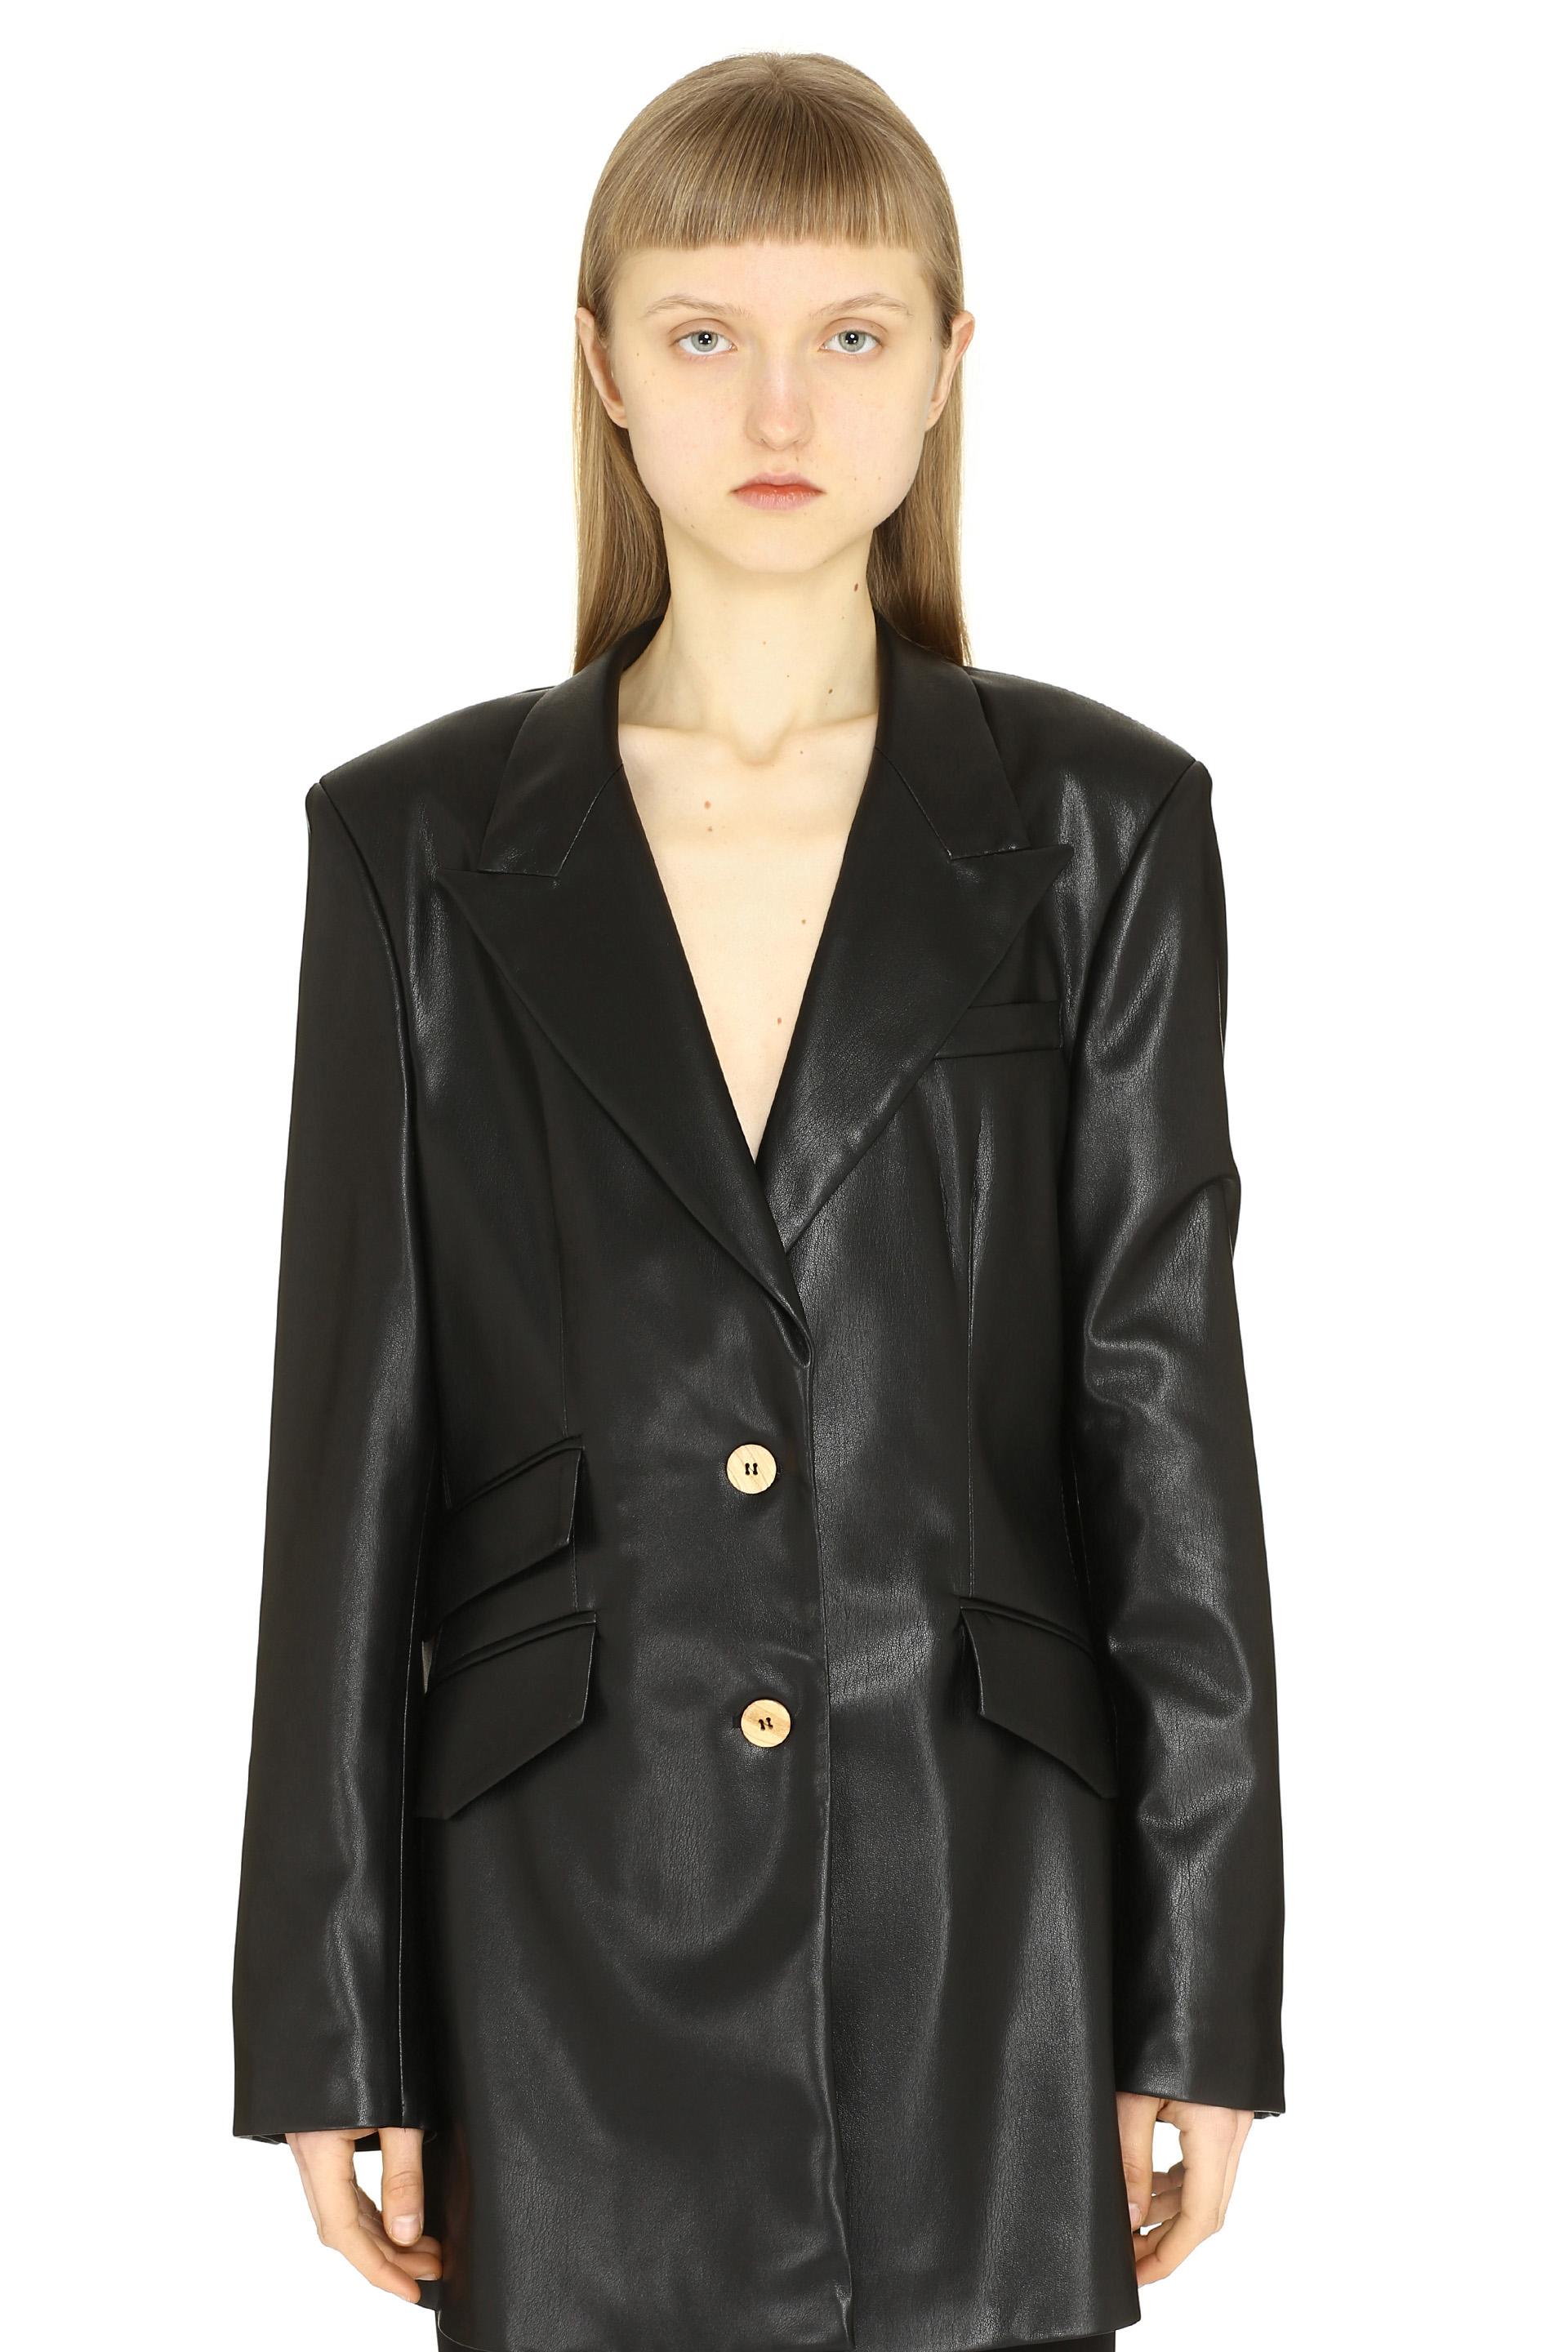 Nanushka Synthetic Faux Leather Jacket in Black - Lyst